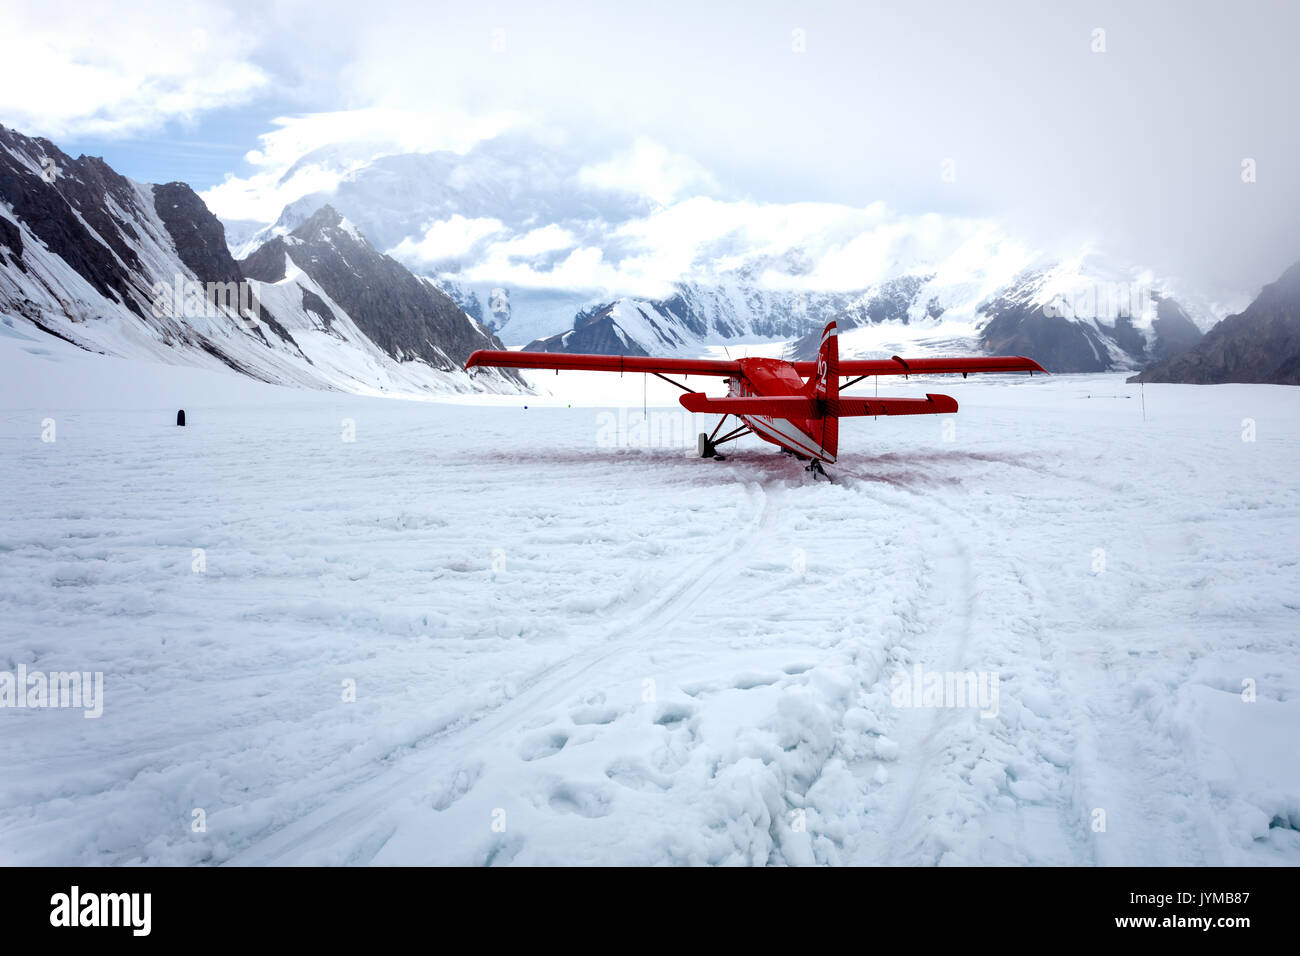 https://c8.alamy.com/comp/JYMB87/small-bush-plane-lands-on-snowy-glacier-JYMB87.jpg